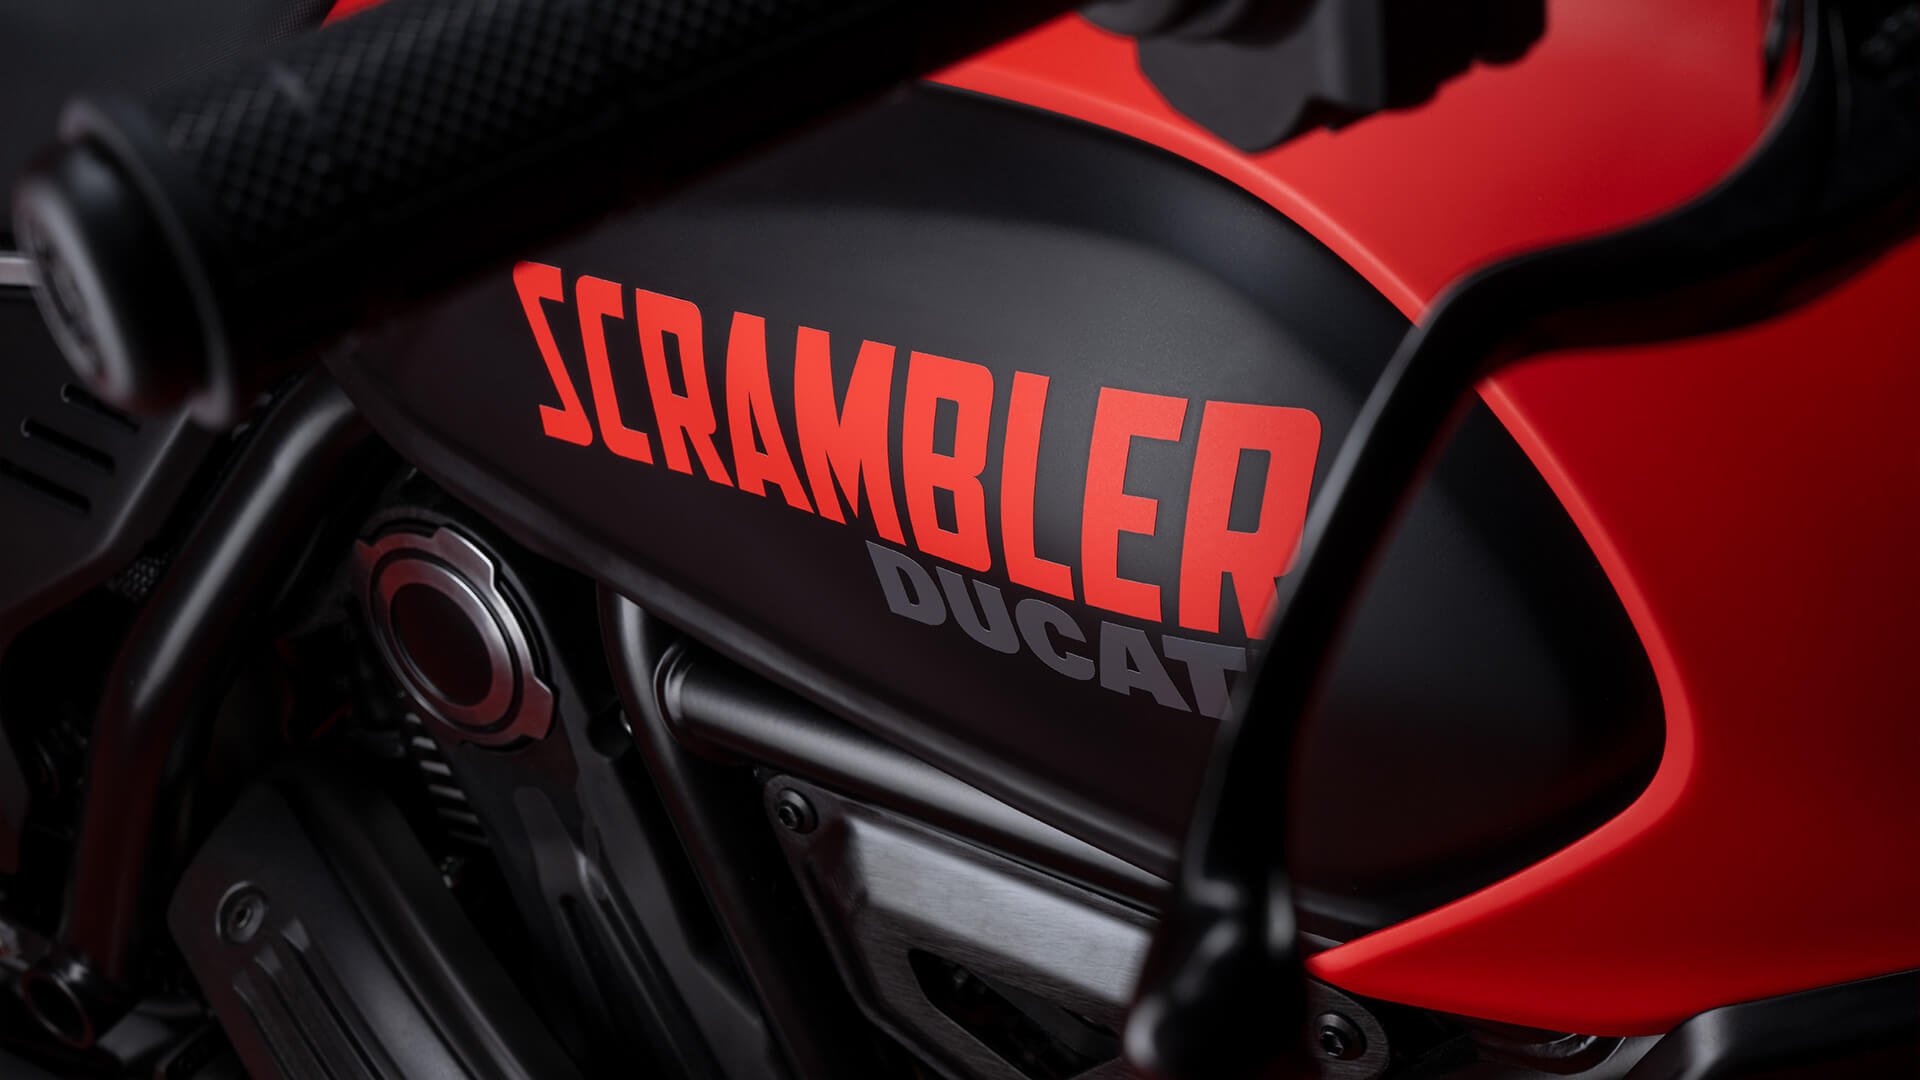 Scrambler-Full-Throttle-Next-Gen-riding-gallery-1920x1080-05.jpg